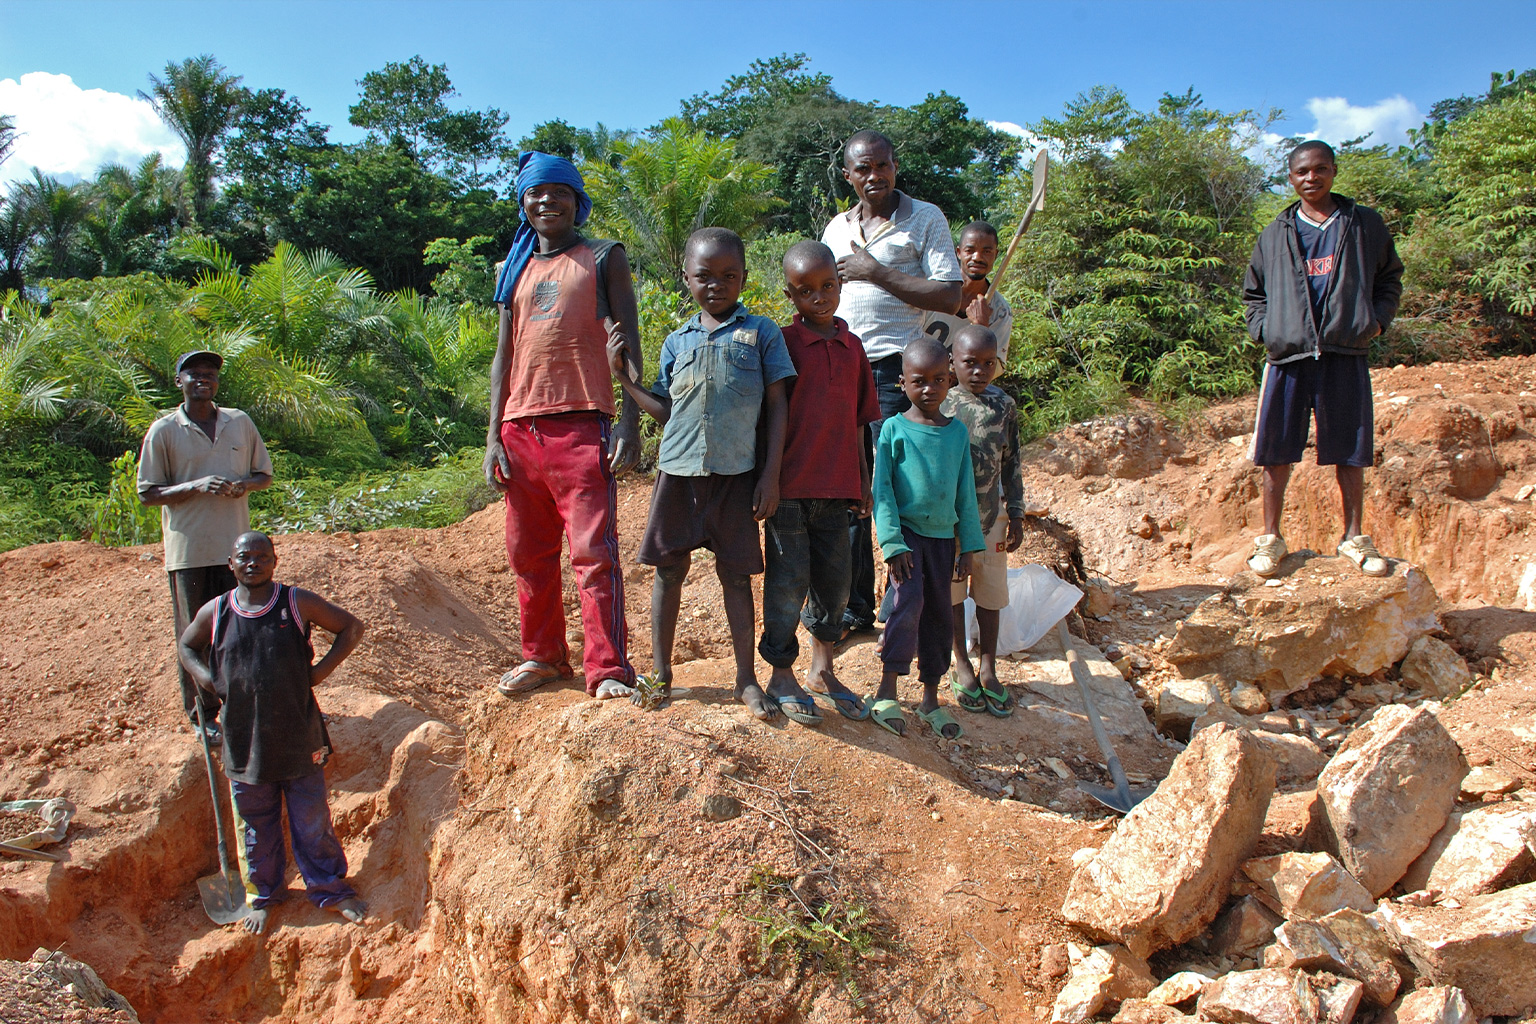 Children working in the cobalt mines.